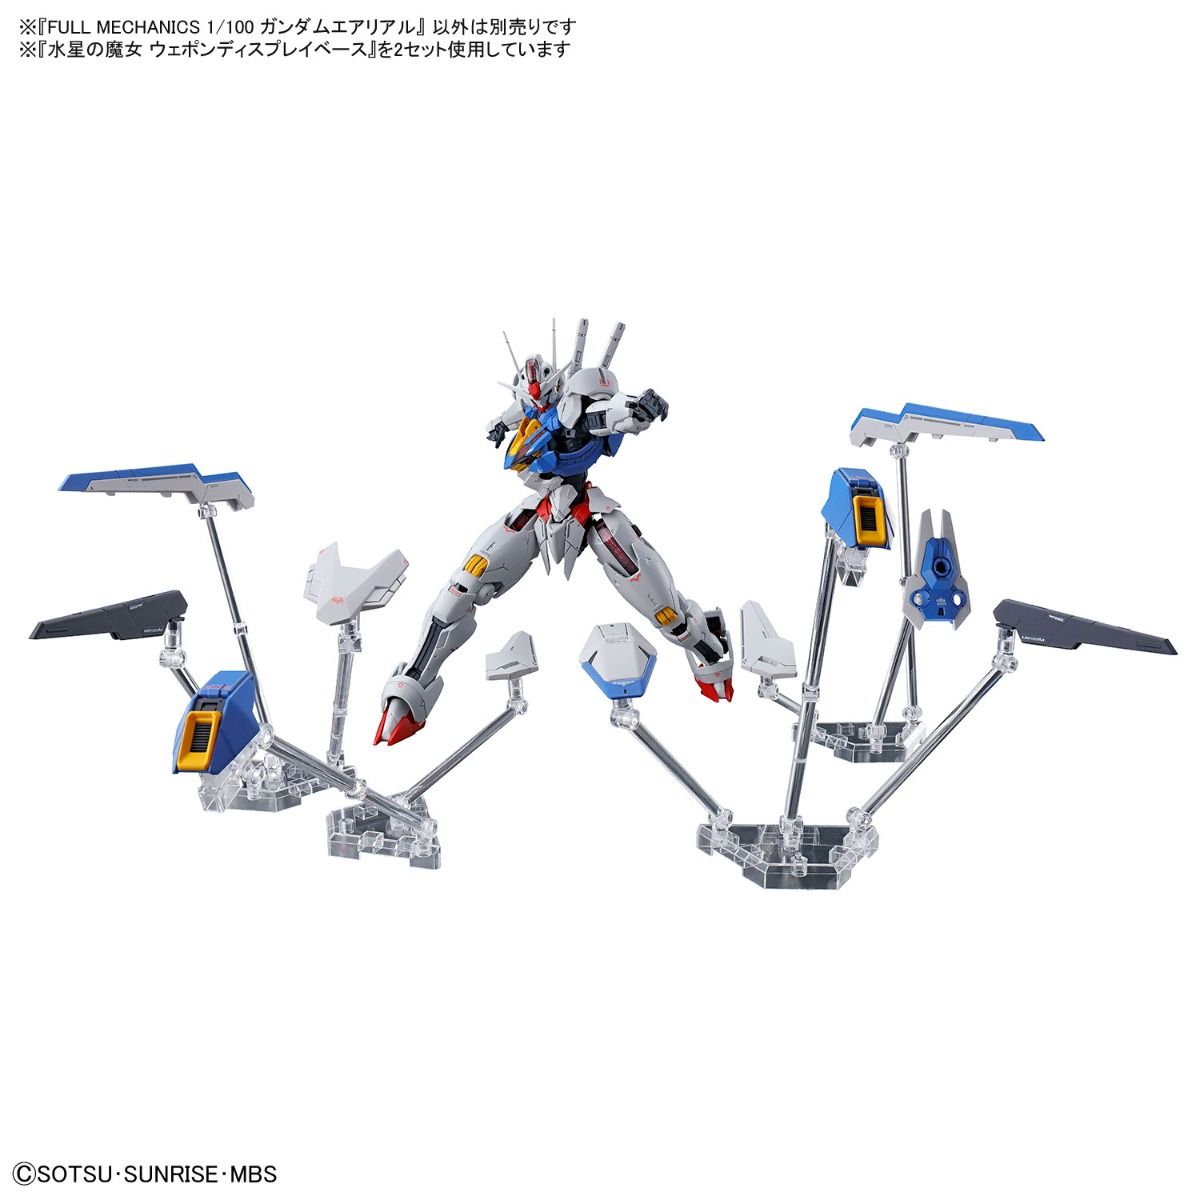 Gunpla Full Mechanics 1/100 Gundam Aerial-Bandai-Ace Cards &amp; Collectibles